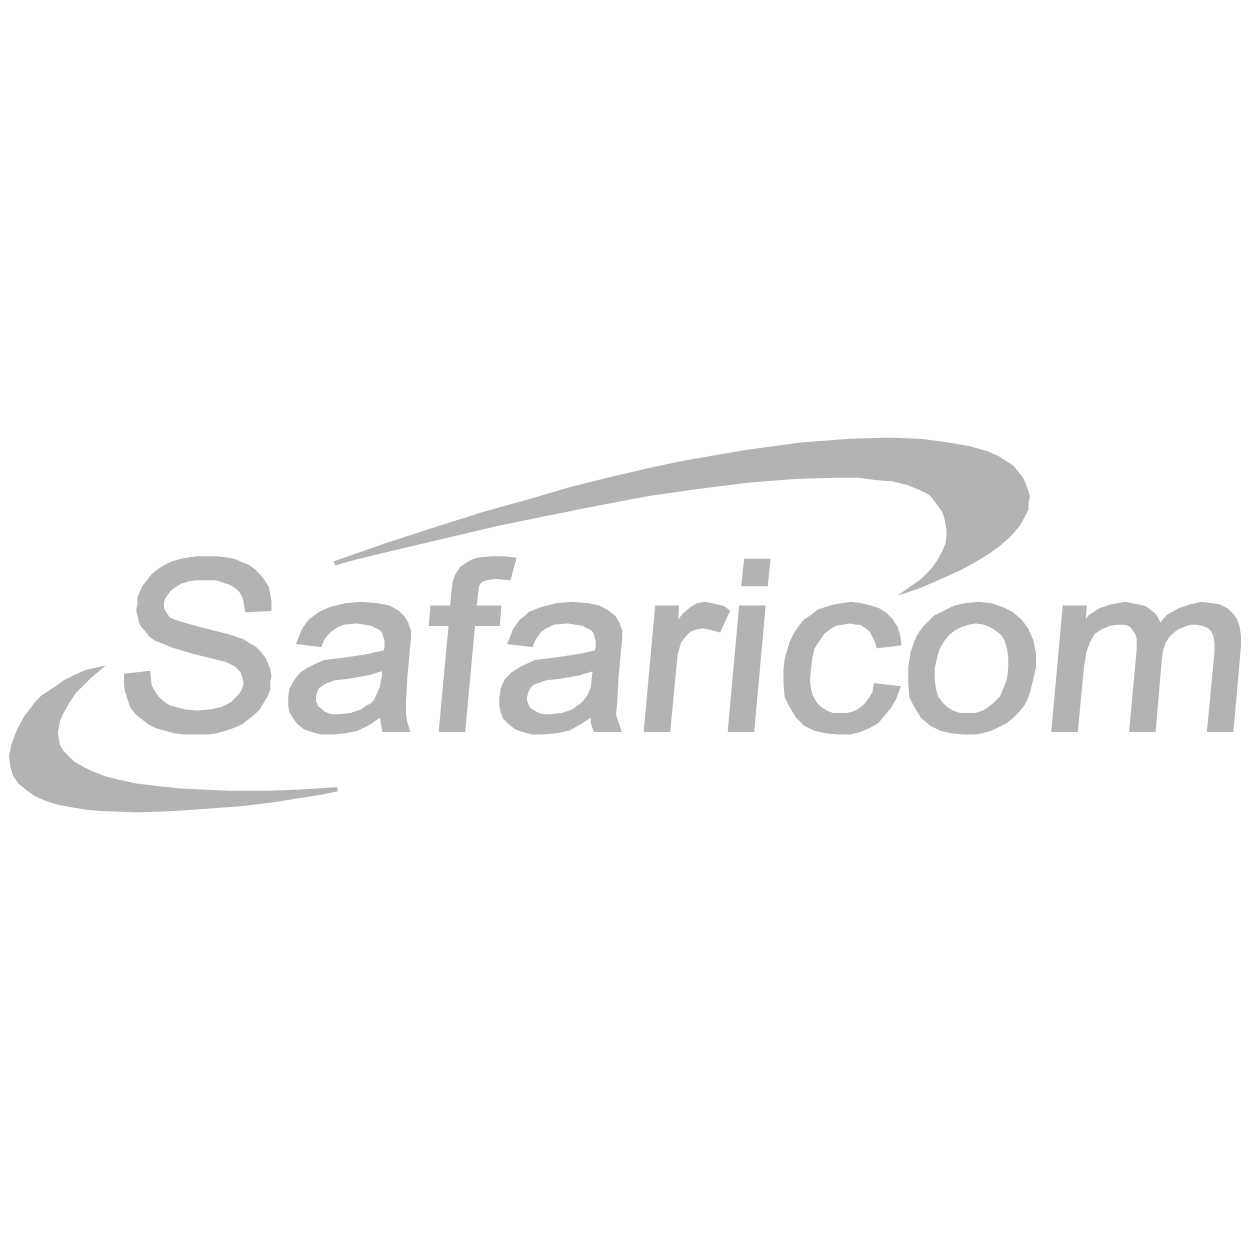 safaricom-01.png